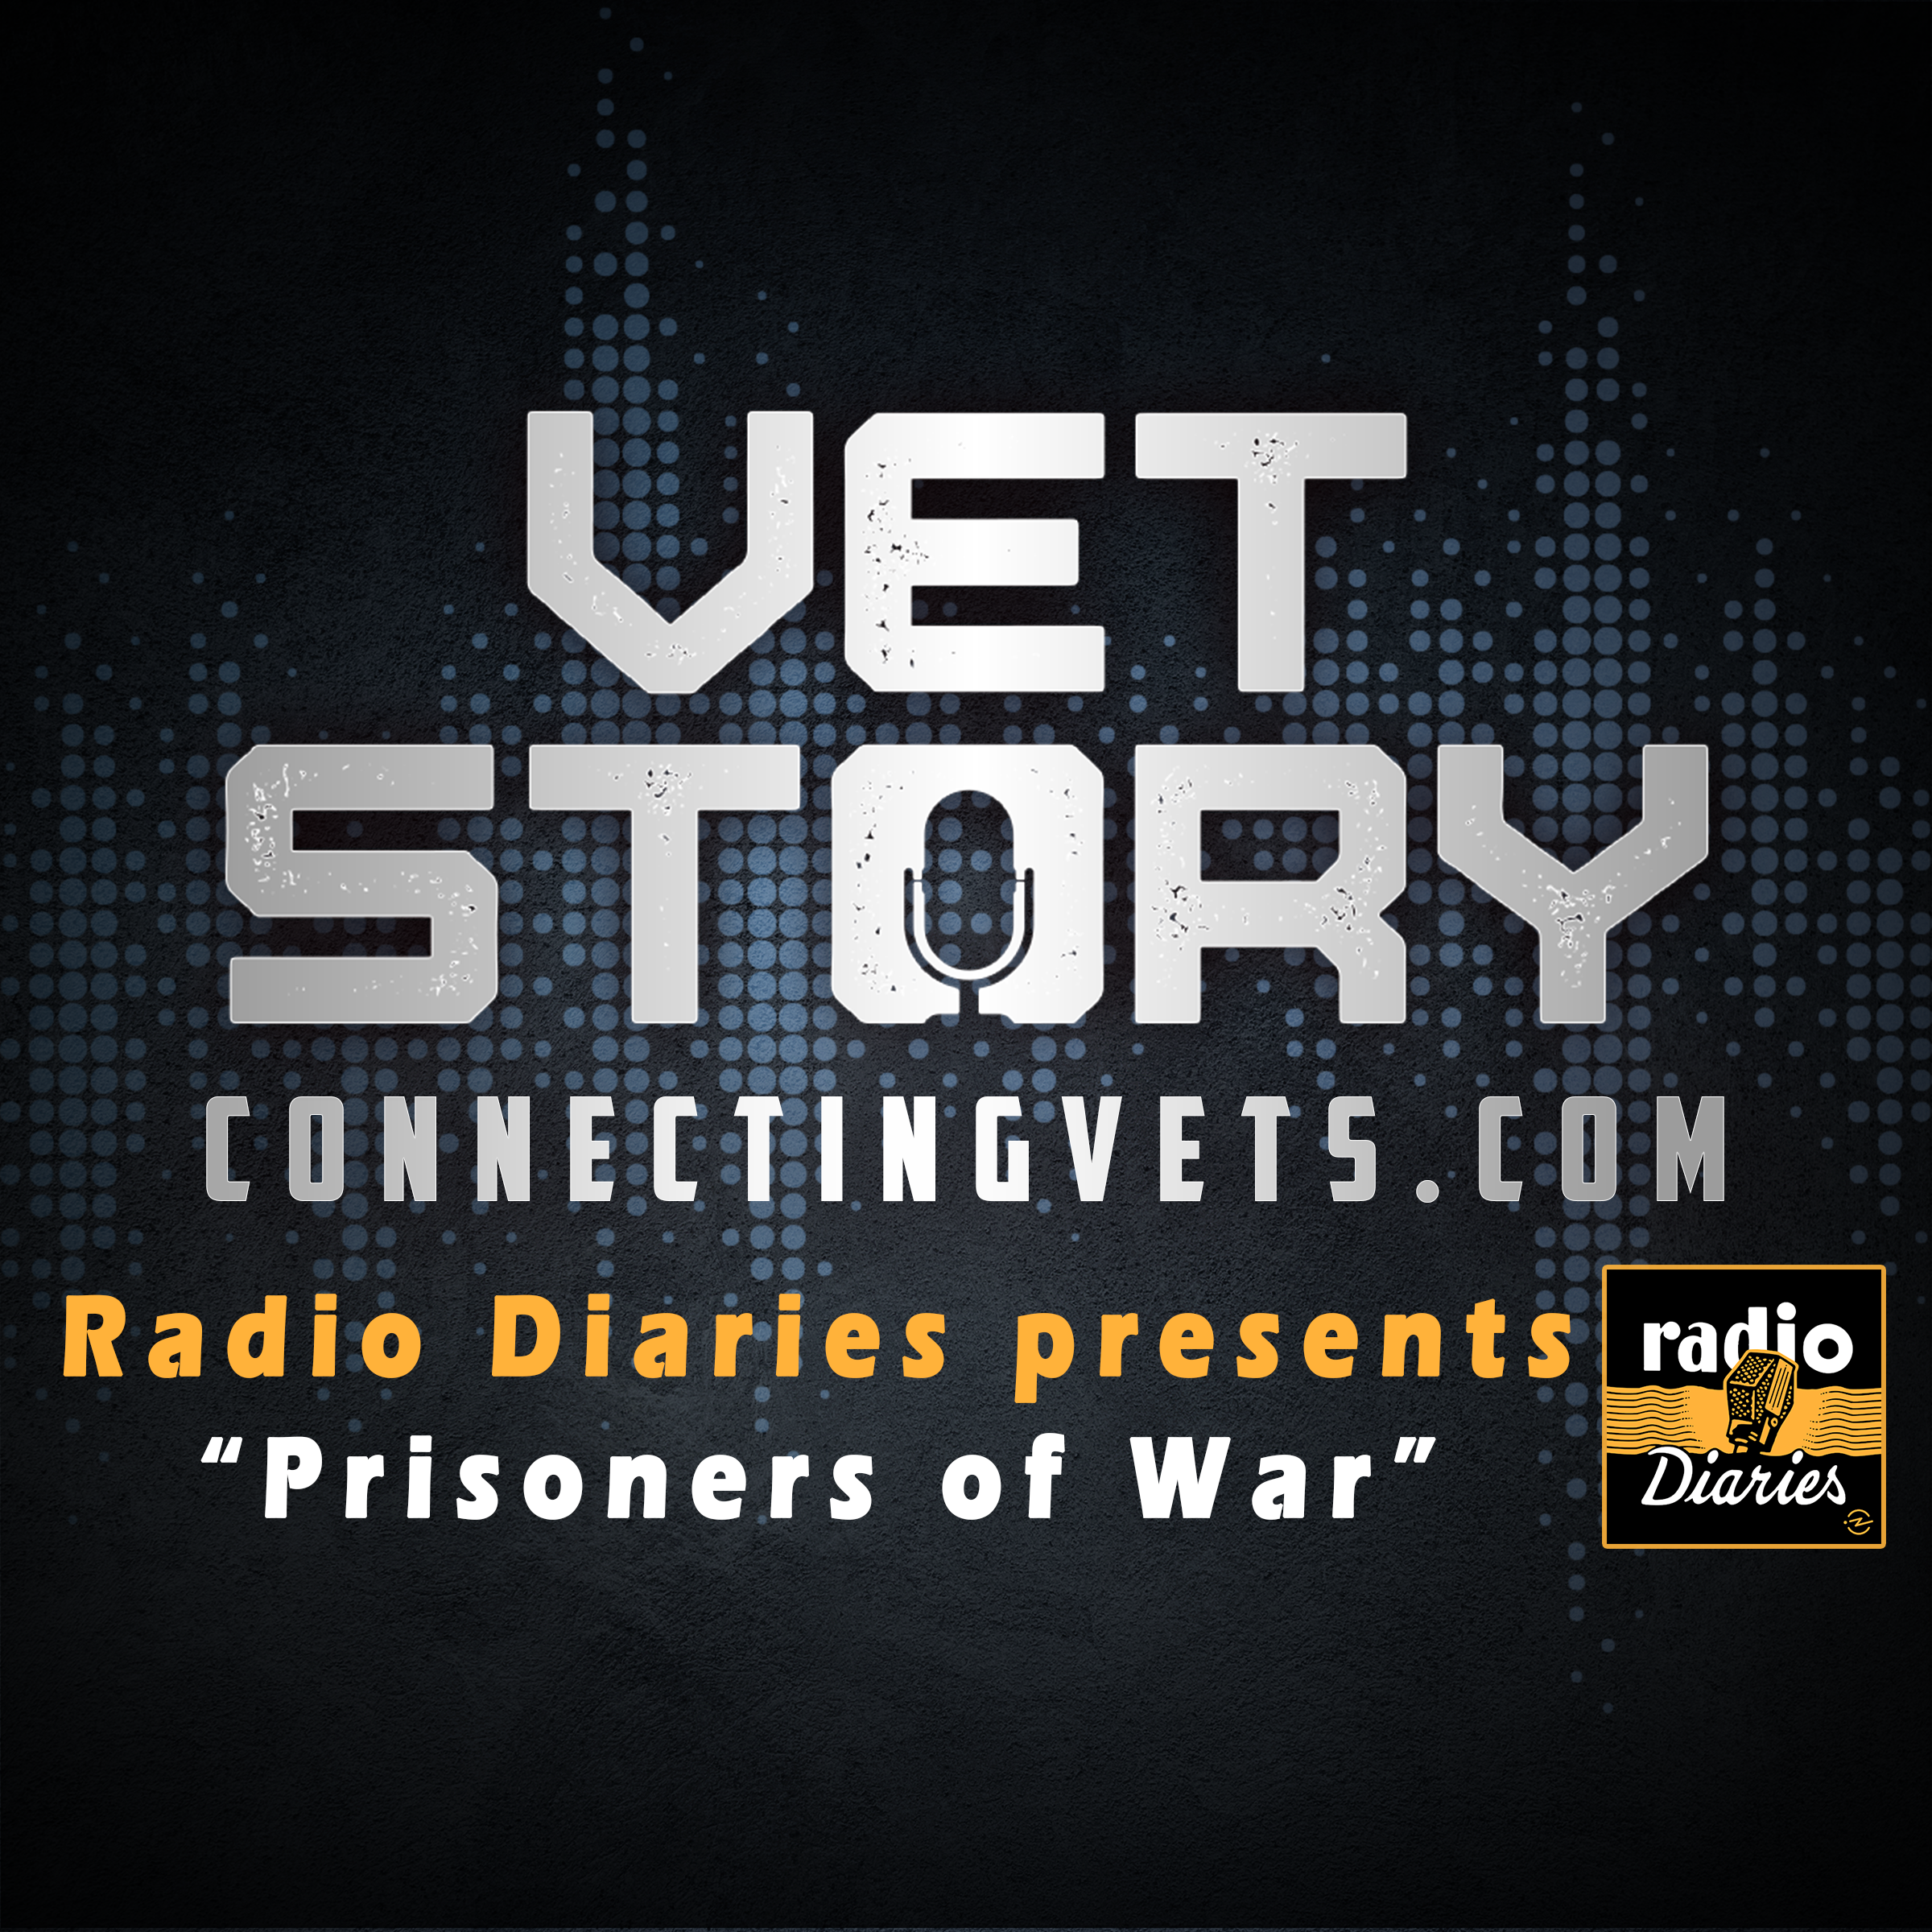 Radio Diaries presents "Prisoners of War"